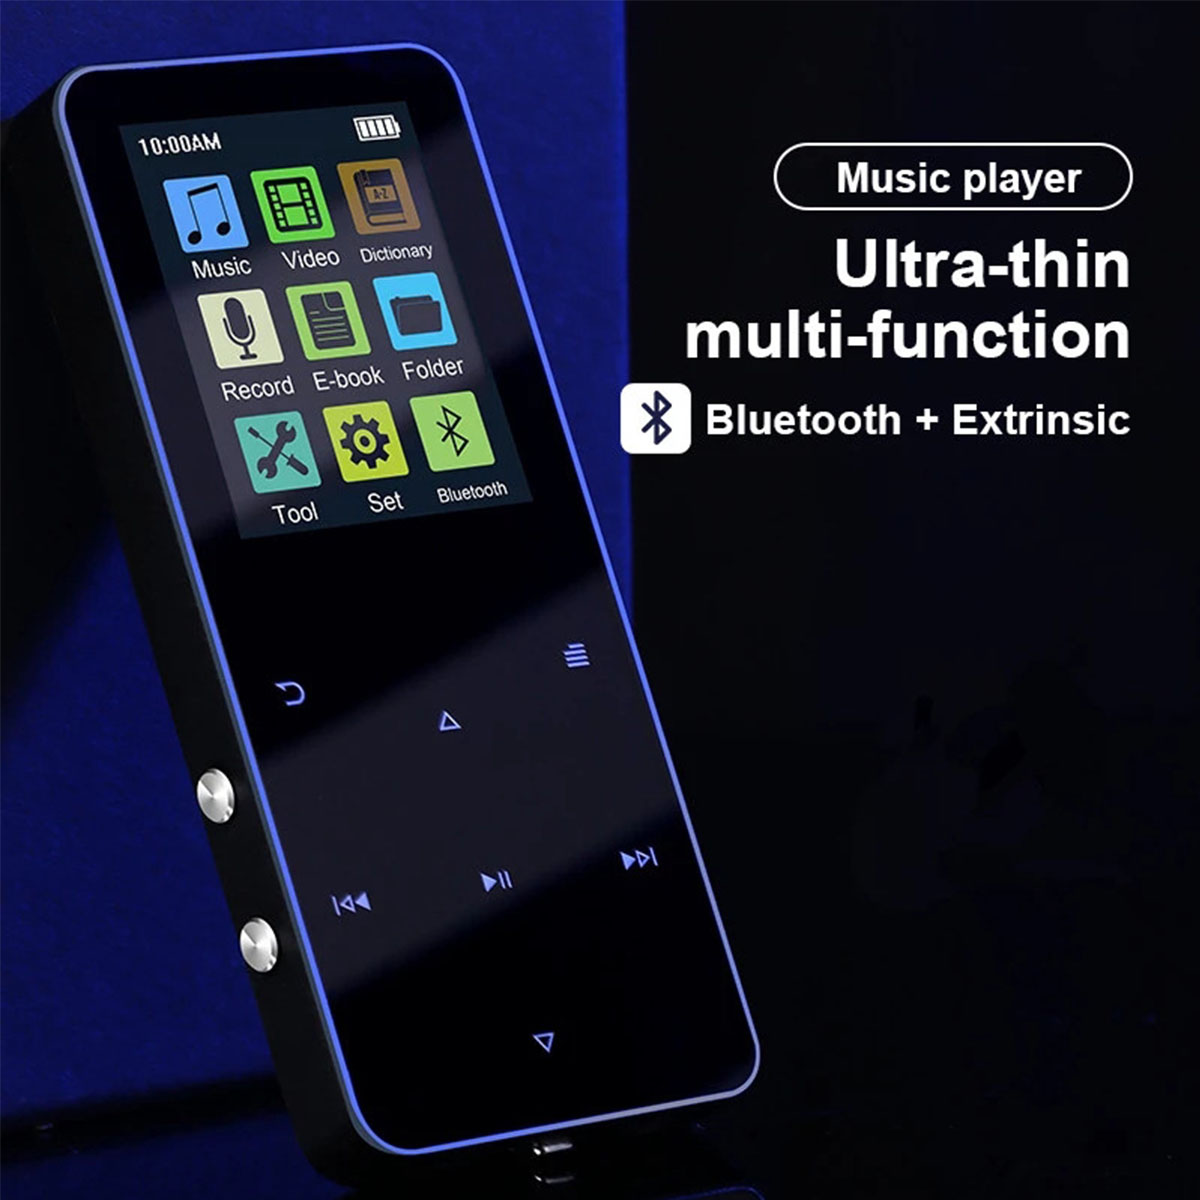 - FM, 64 MP3 GB, Edition Walkman BRIGHTAKE MP4 Student 64GB Rosa Bluetooth,